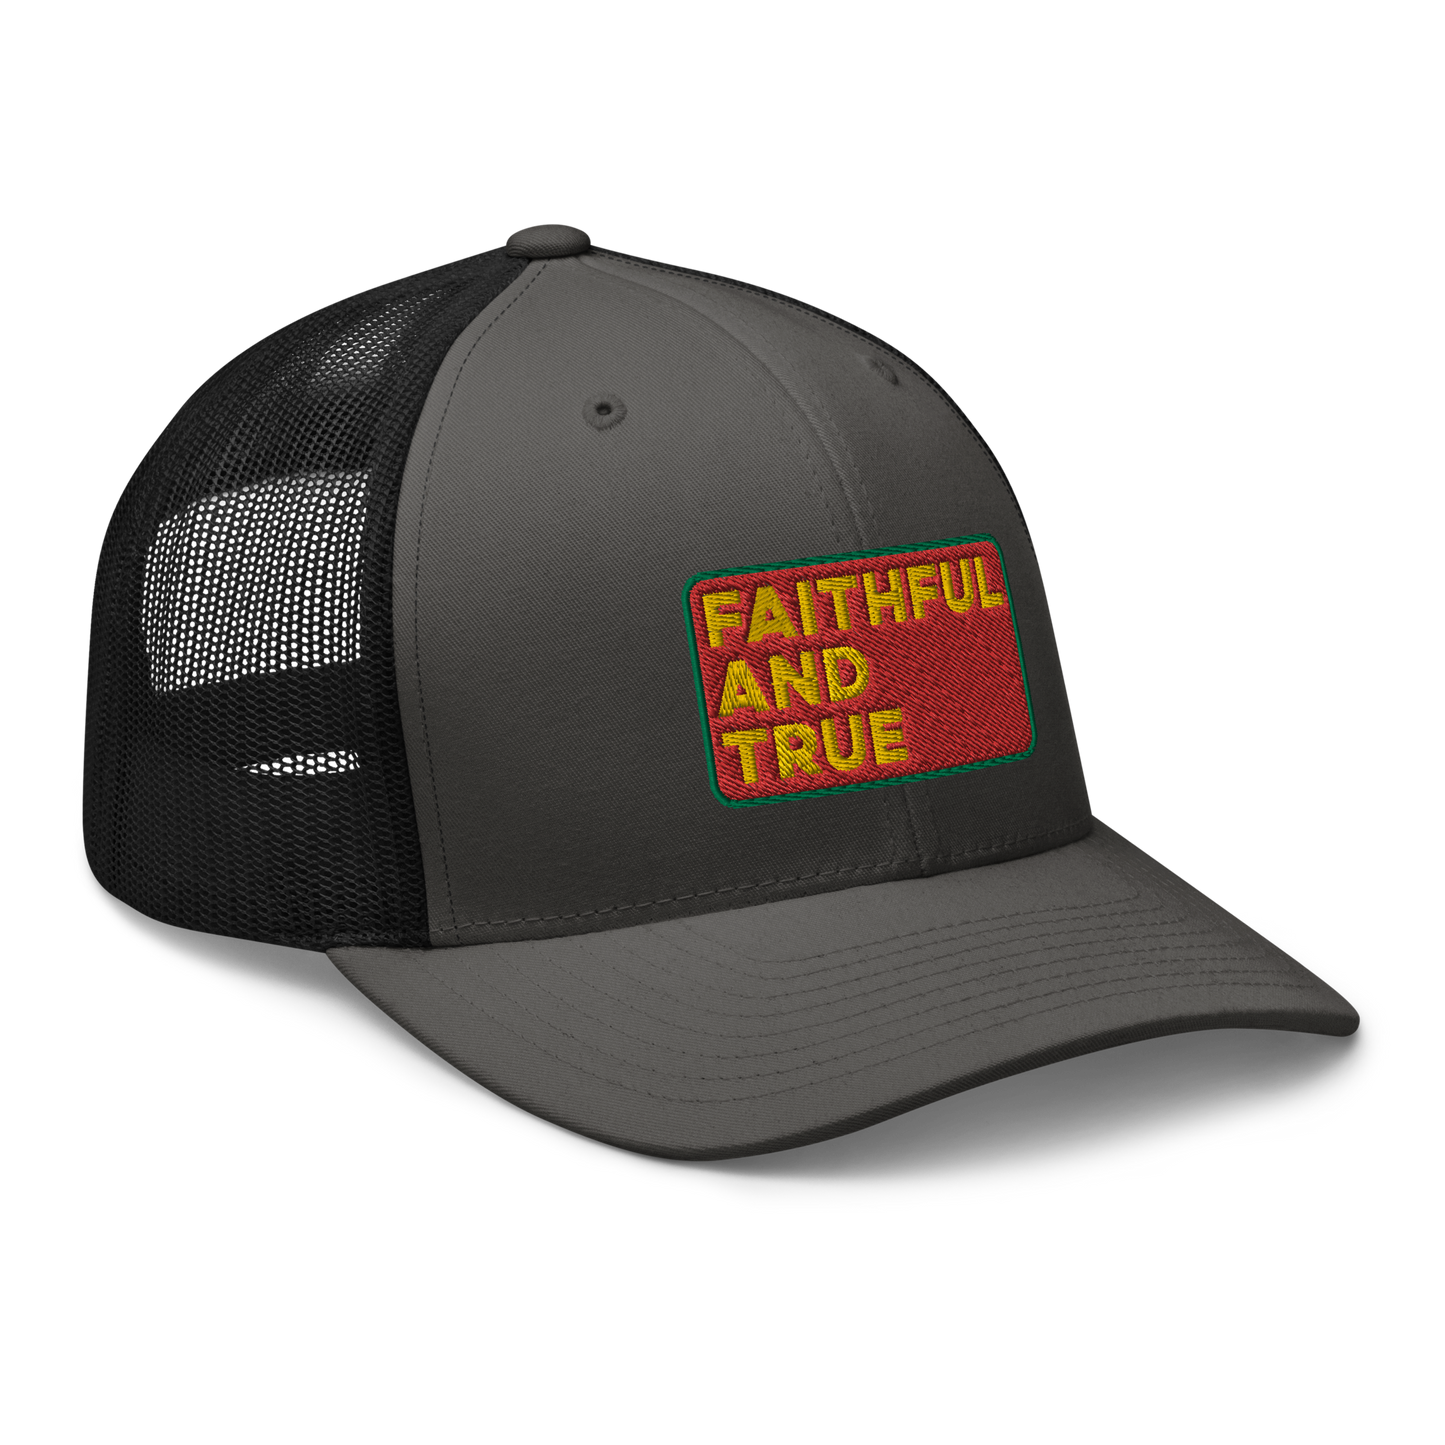 5th Field Artillery Regiment Faithful and True Embroidered Trucker Hat